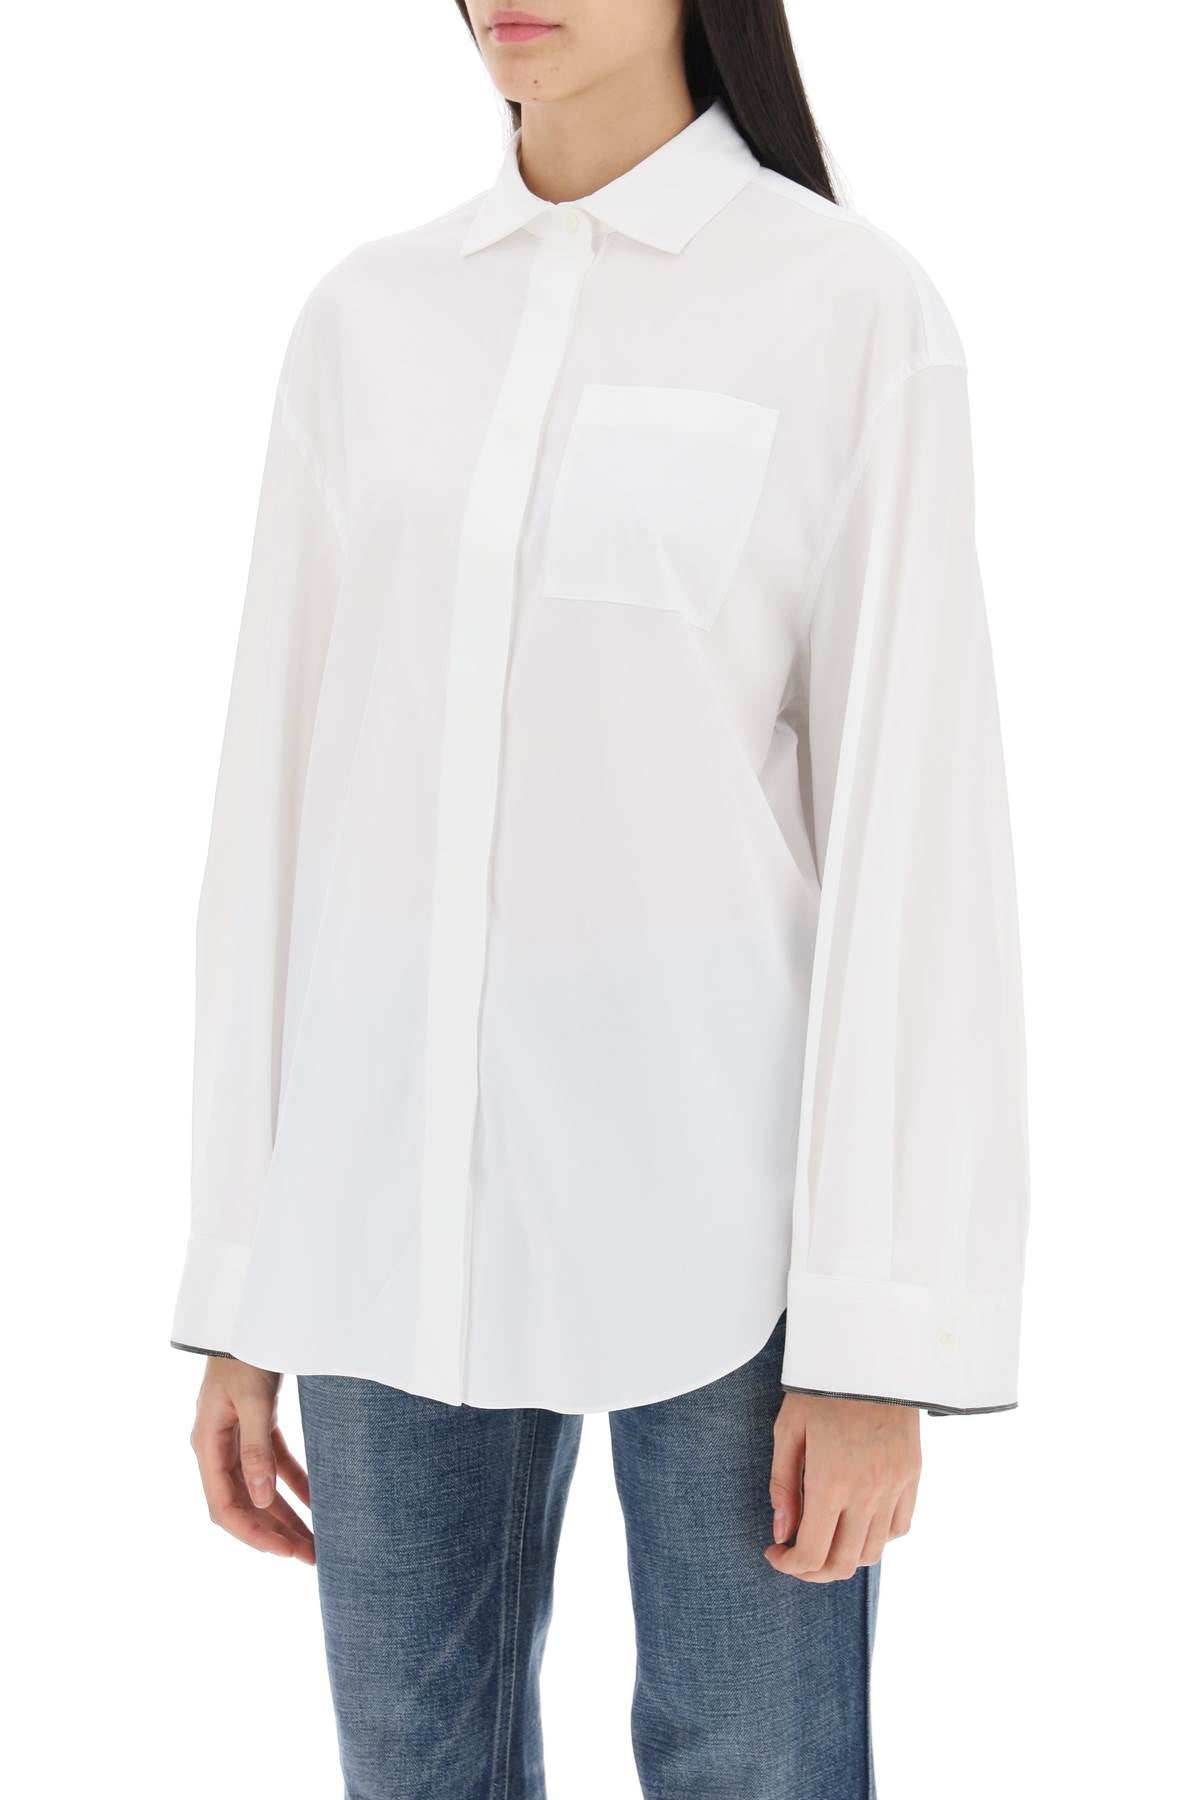 Brunello Cucinelli Wide Sleeve Shirt With Shiny Cuff Details Women - 4